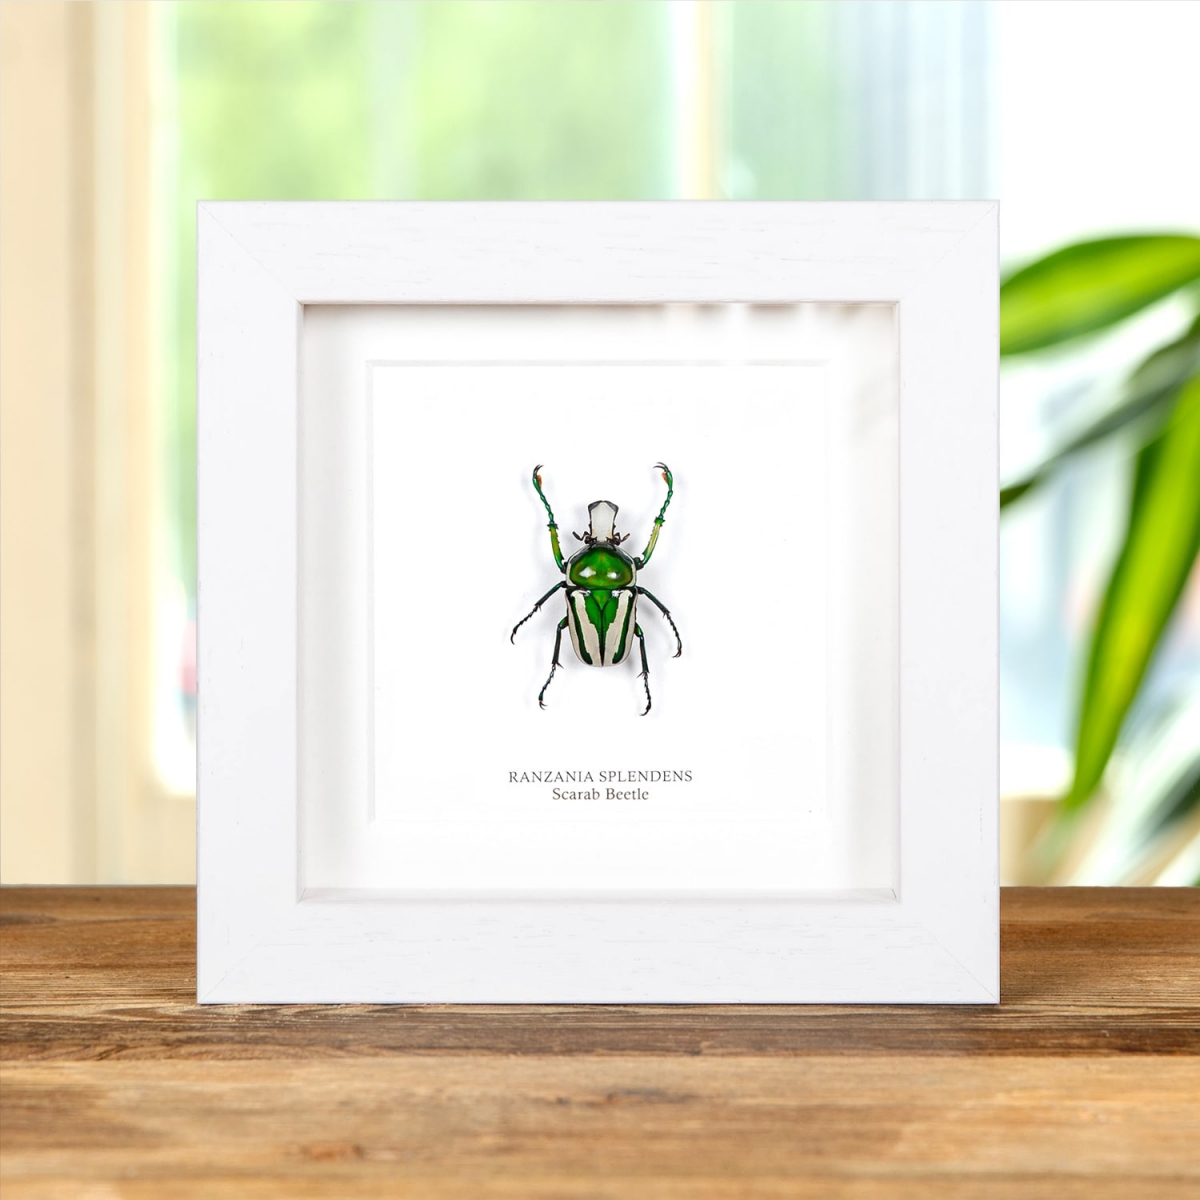 Green Scarab Beetle in Box Frame (Ranzania splendens)